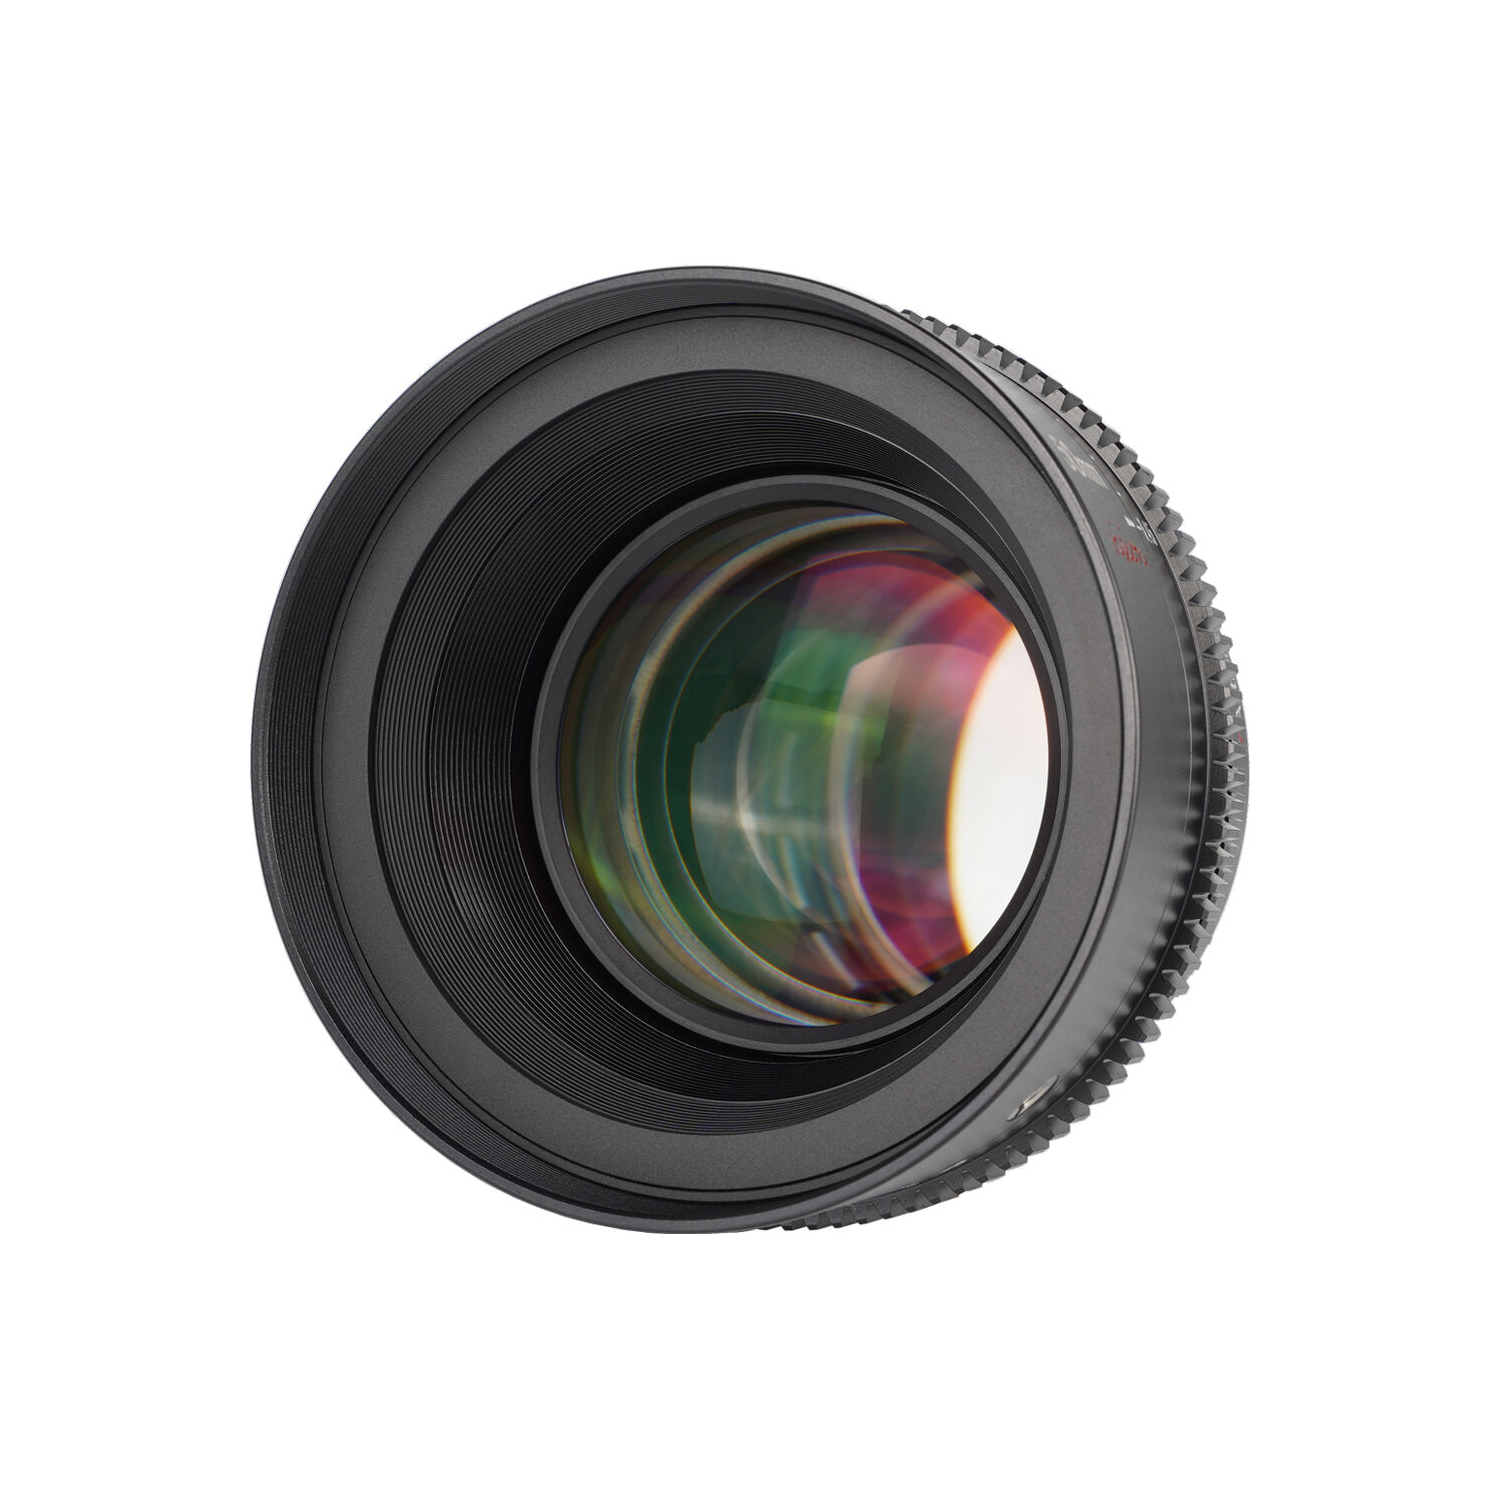 7artisans Photoelectric 50mm T1.05 Vision Cine Lens for Sony E Mount - Open Box